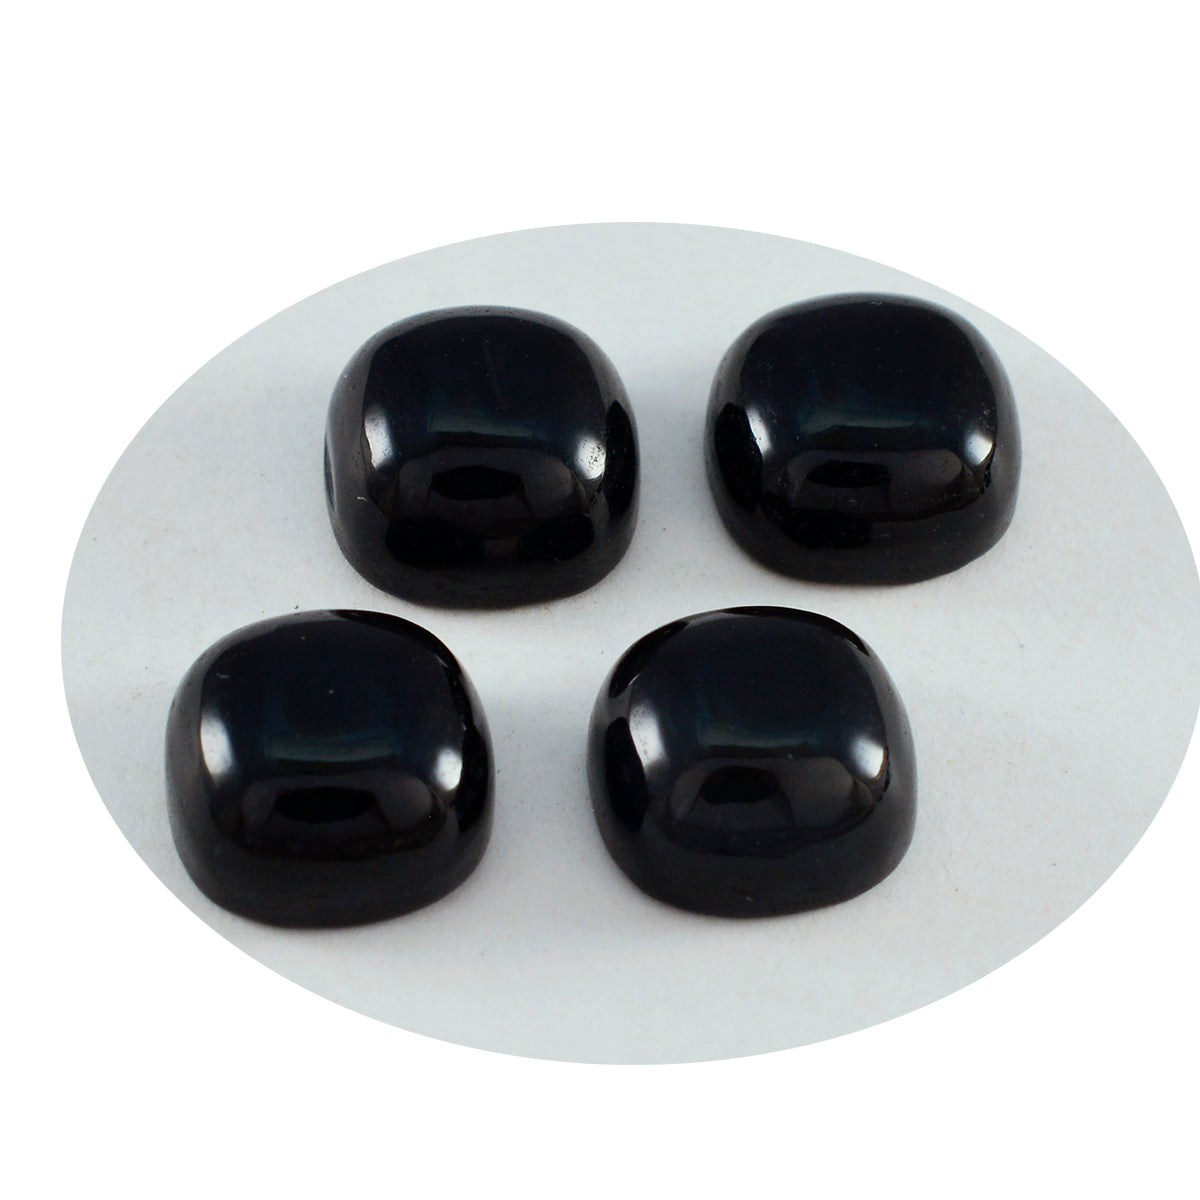 Riyogems 1PC Black Onyx Cabochon 7x7 mm Cushion Shape Nice Quality Loose Gemstone